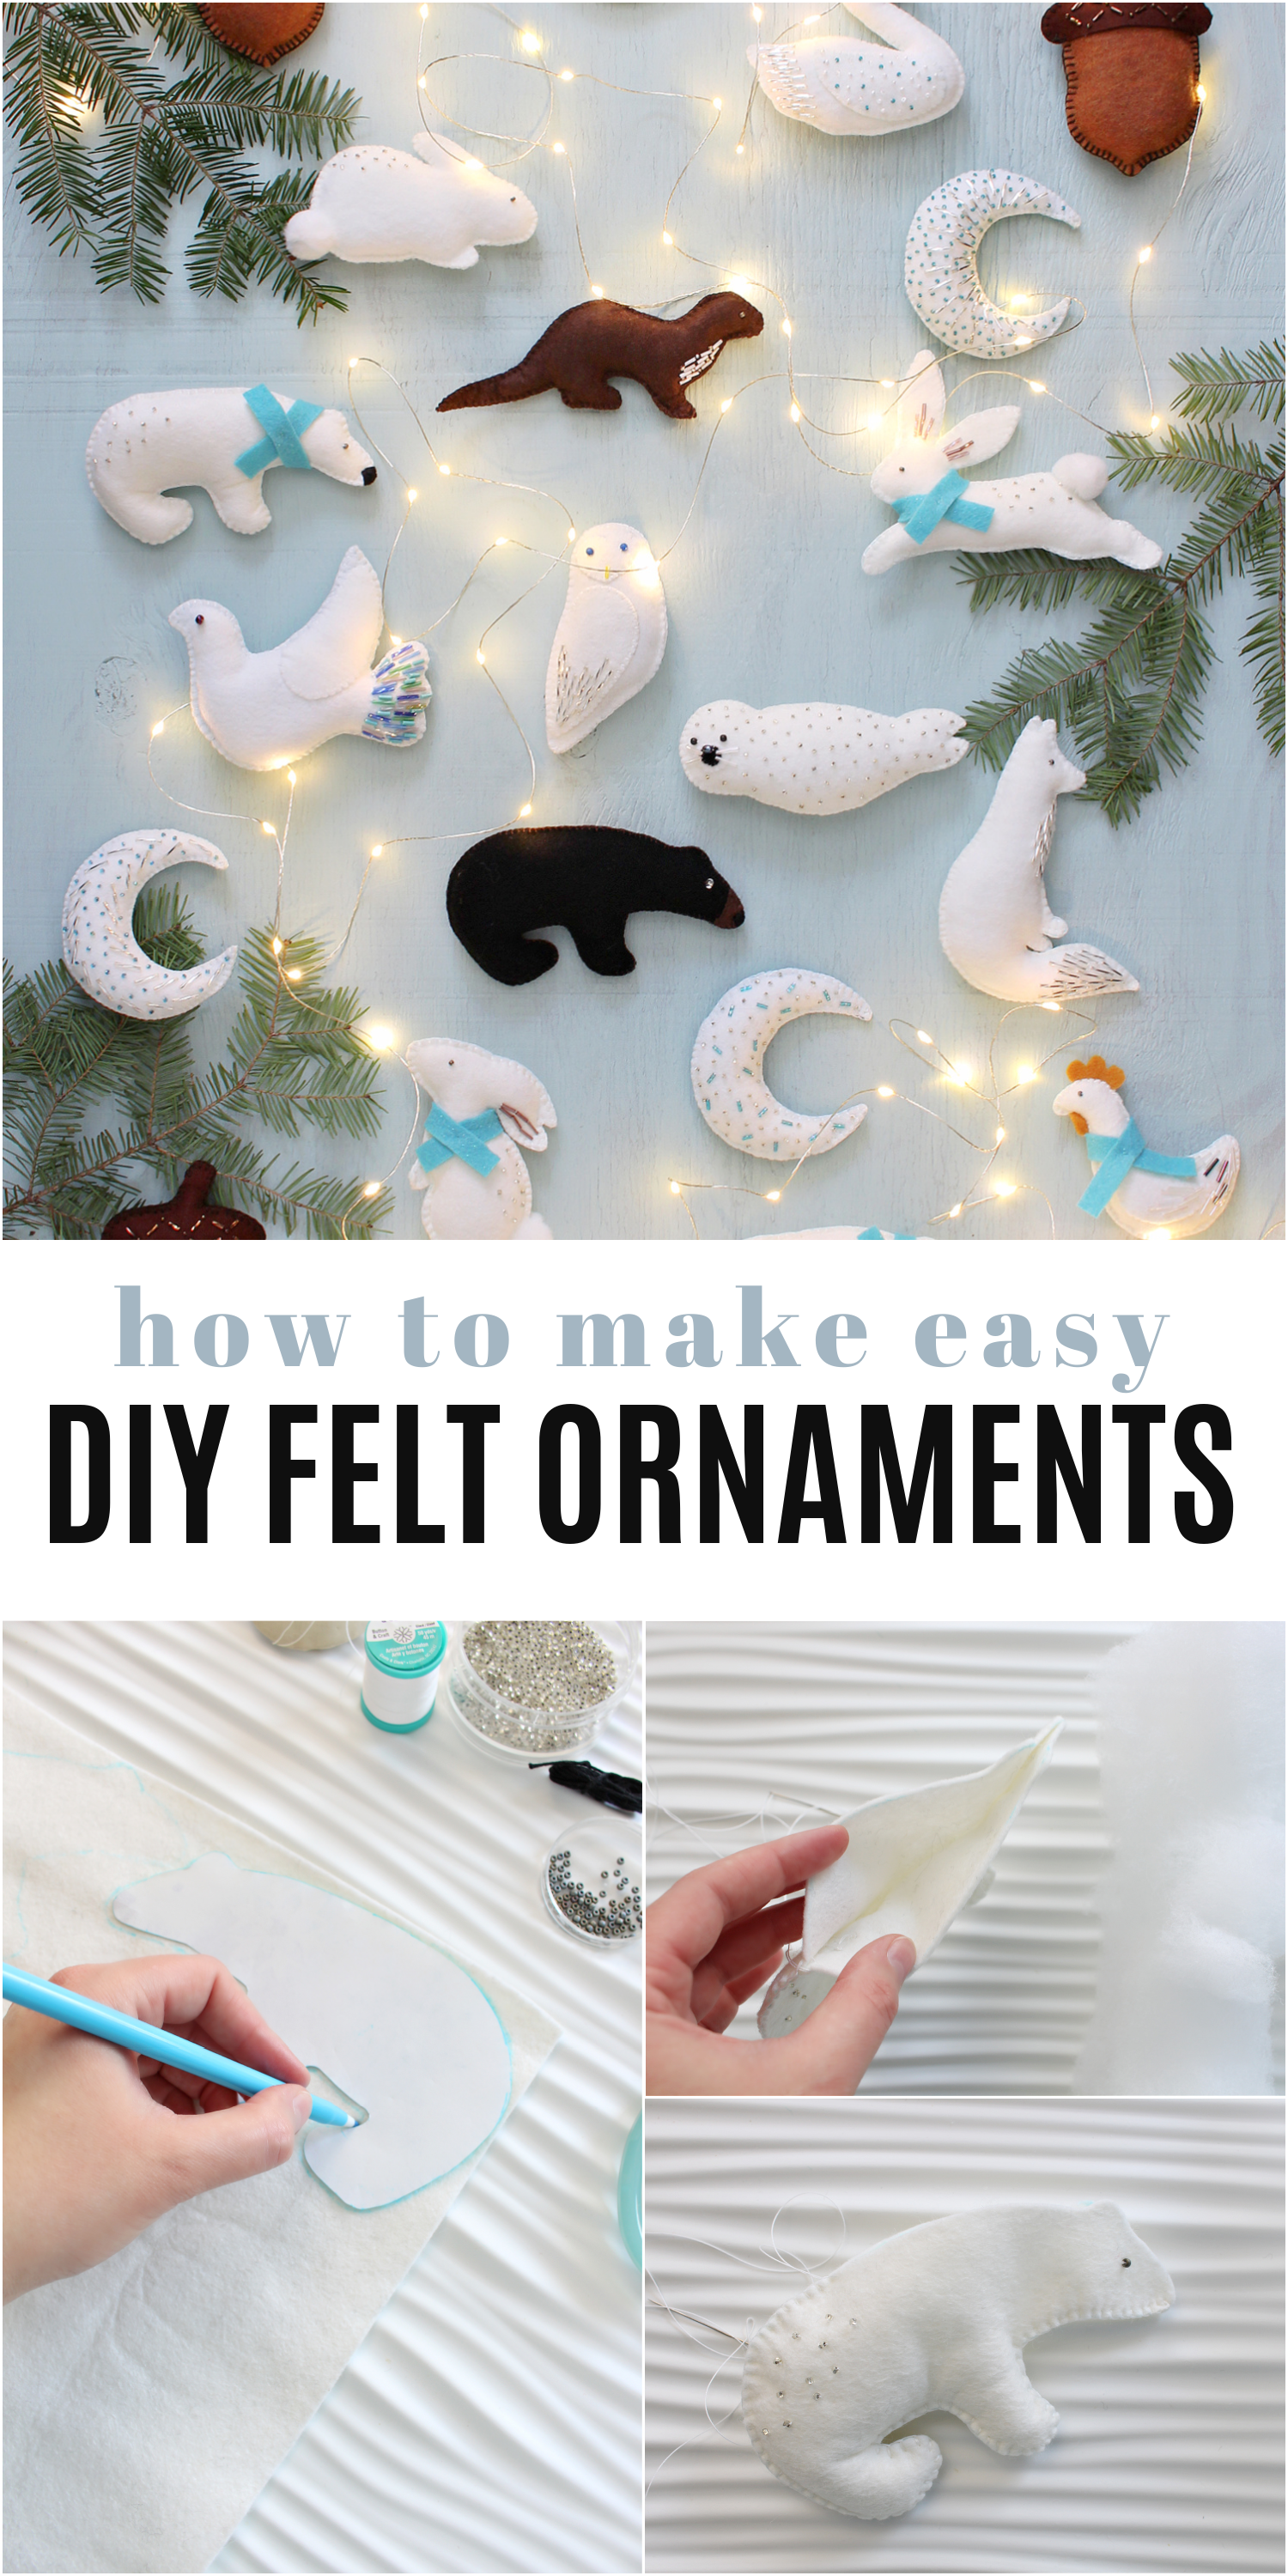 How to Make Easy DIY Felt Animal Ornaments